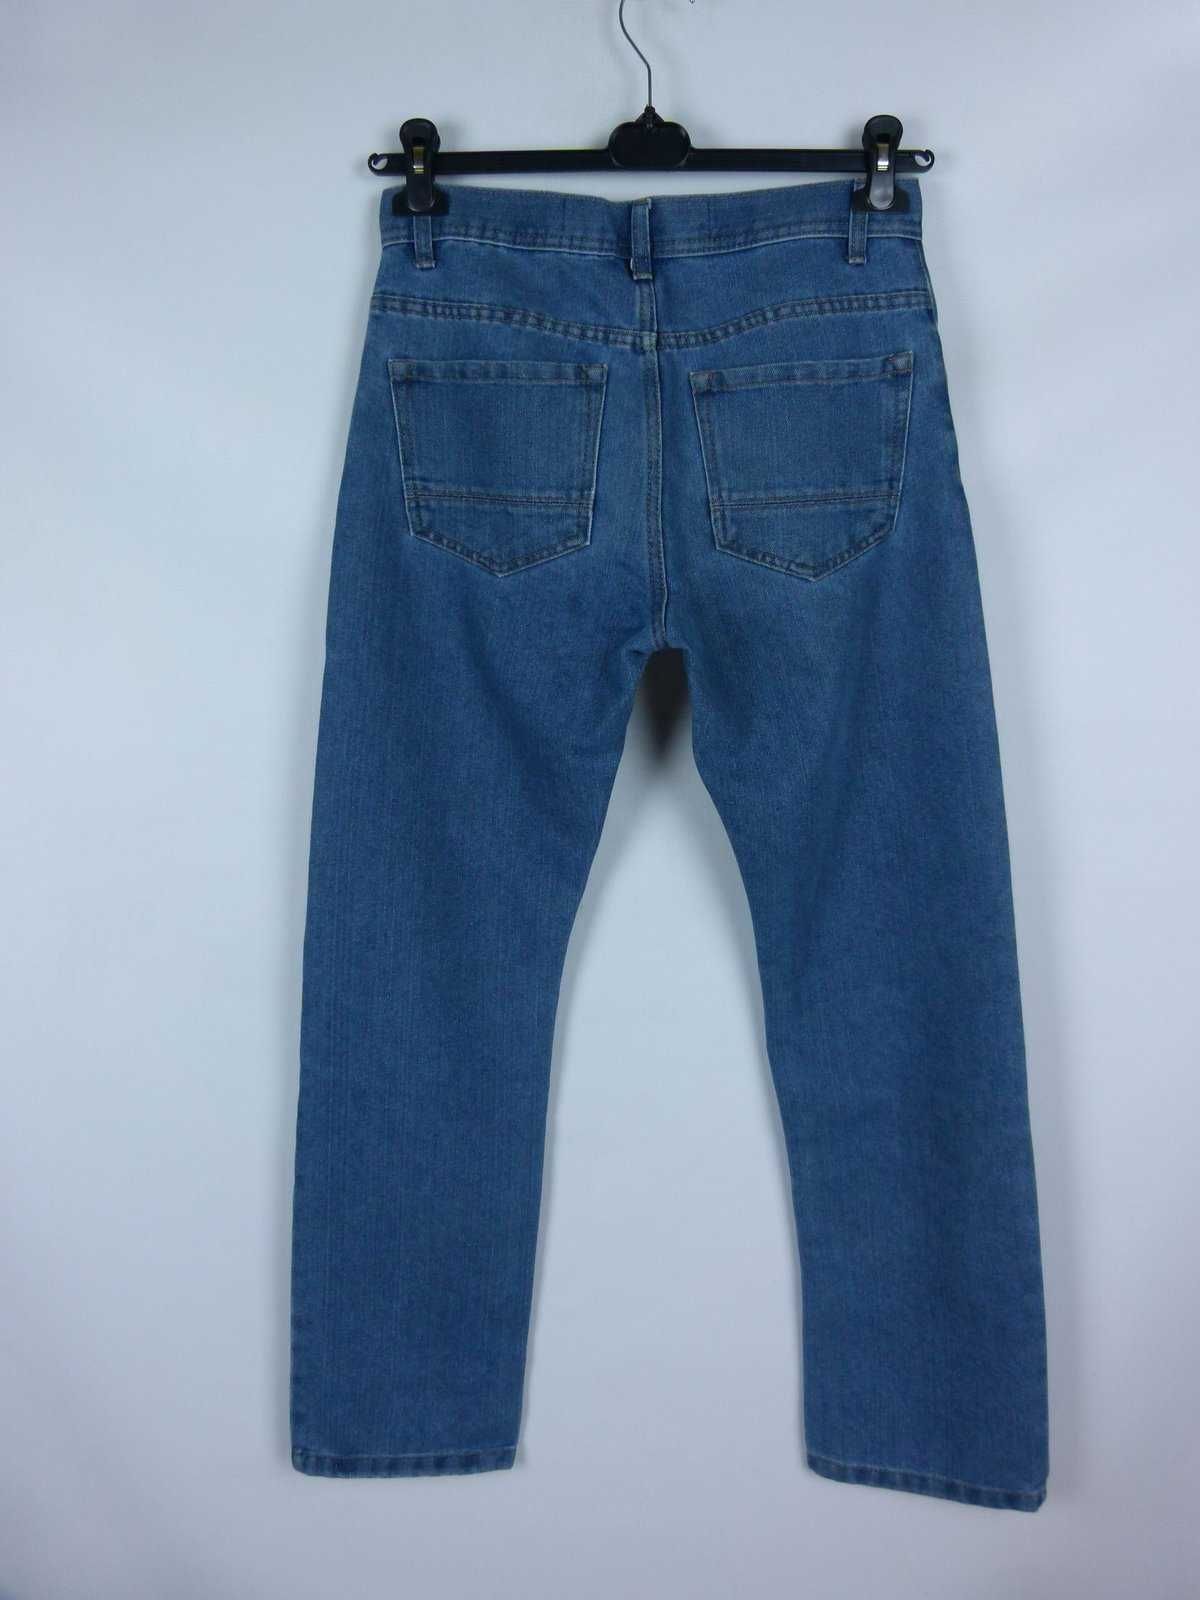 Denim Co regular fit spodnie jeans W28 / L32 - S